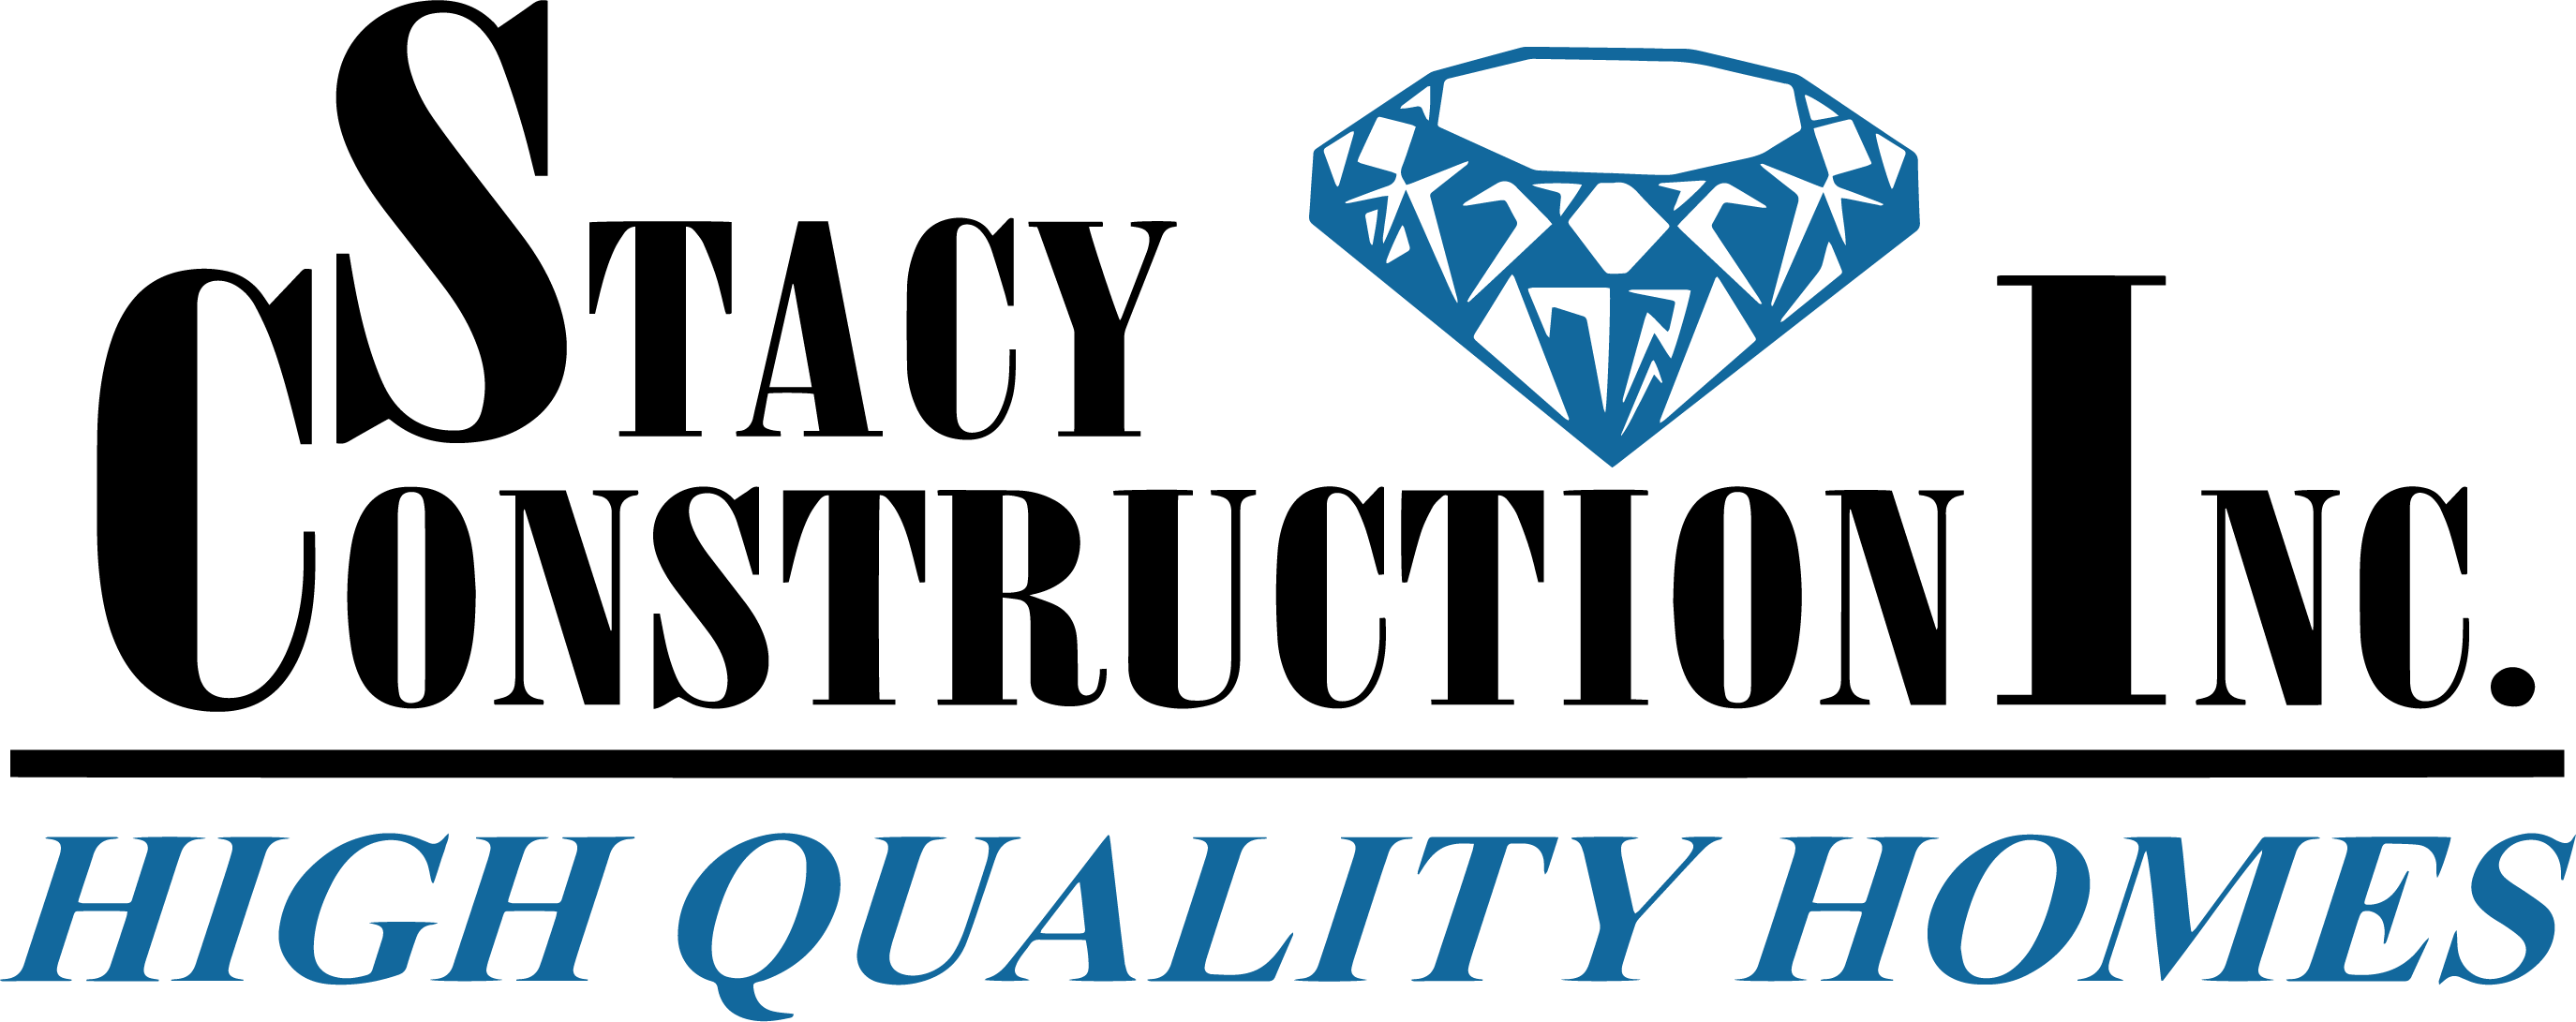 Stacy Construction Inc. | High Quality Homes | Logo